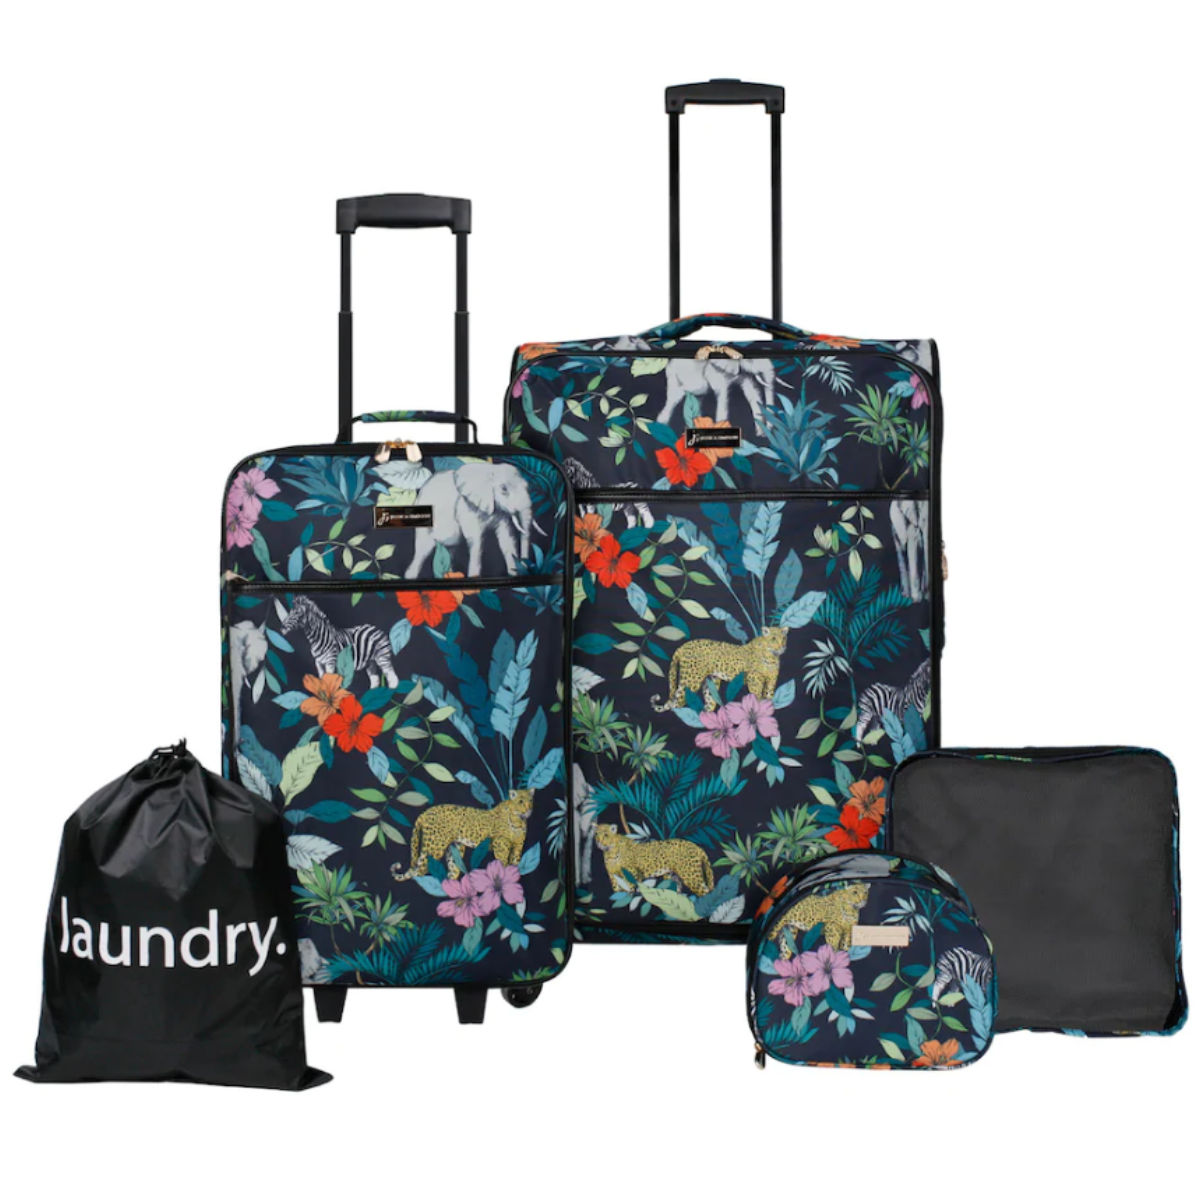 Jessica Simpson 5-Piece Printed Luggage Set